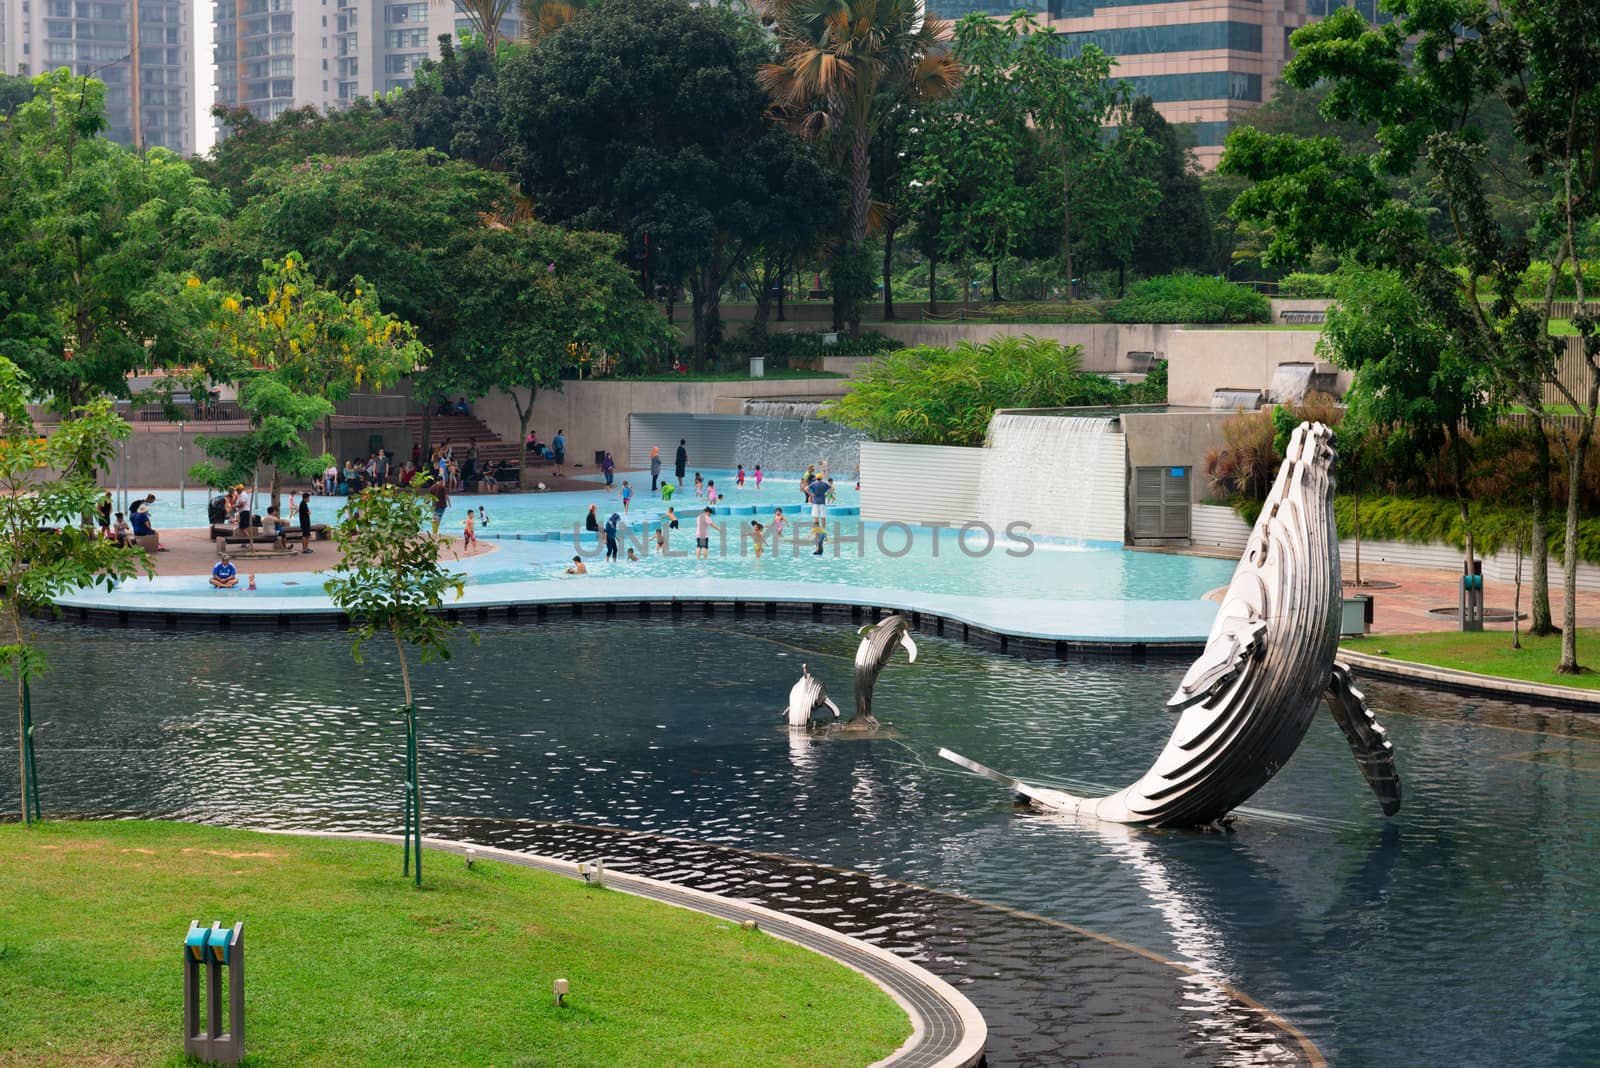 KUALA LUMPUR - JUN 15: Pool in KLCC Park is a public pool located near Petronal twin towers on Jun 15, 2013 in Kuala Lumpur, Malaysia. 20 hectares park was designed by Roberto Burle Marx in 1980.